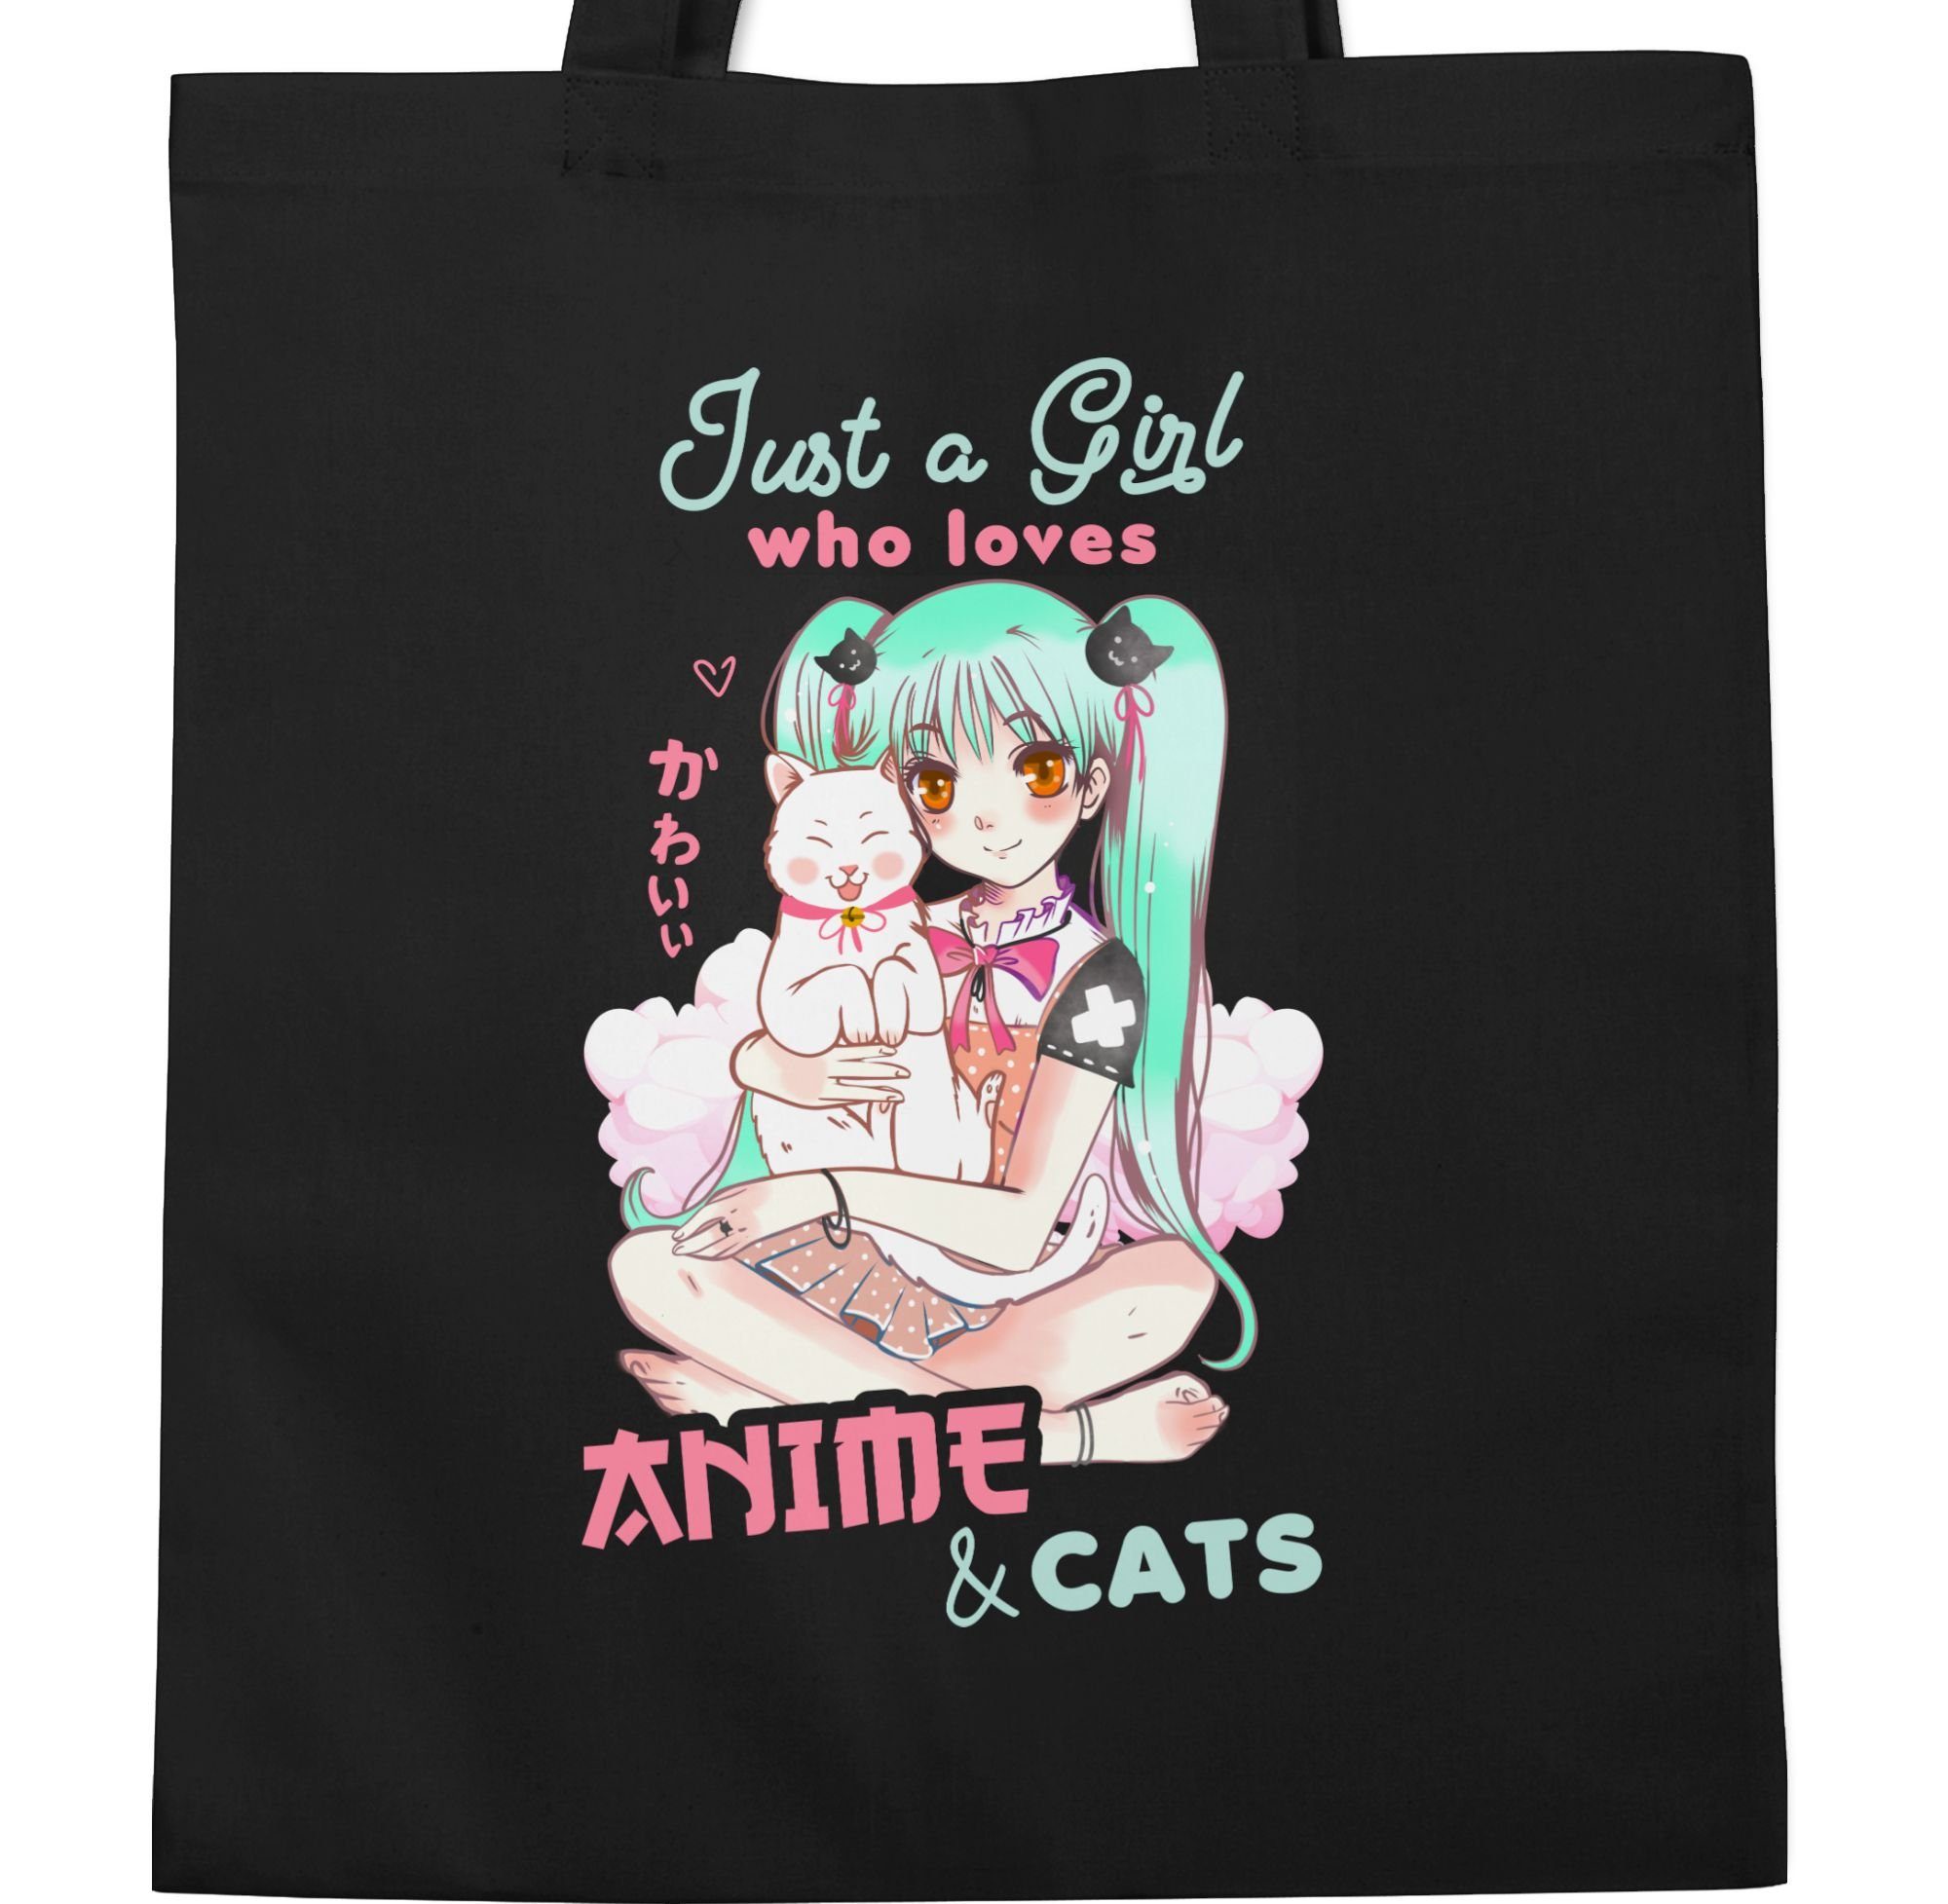 Shirtracer Umhängetasche Just a girl Geschenke Schwarz 1 Anime anime who loves & cats